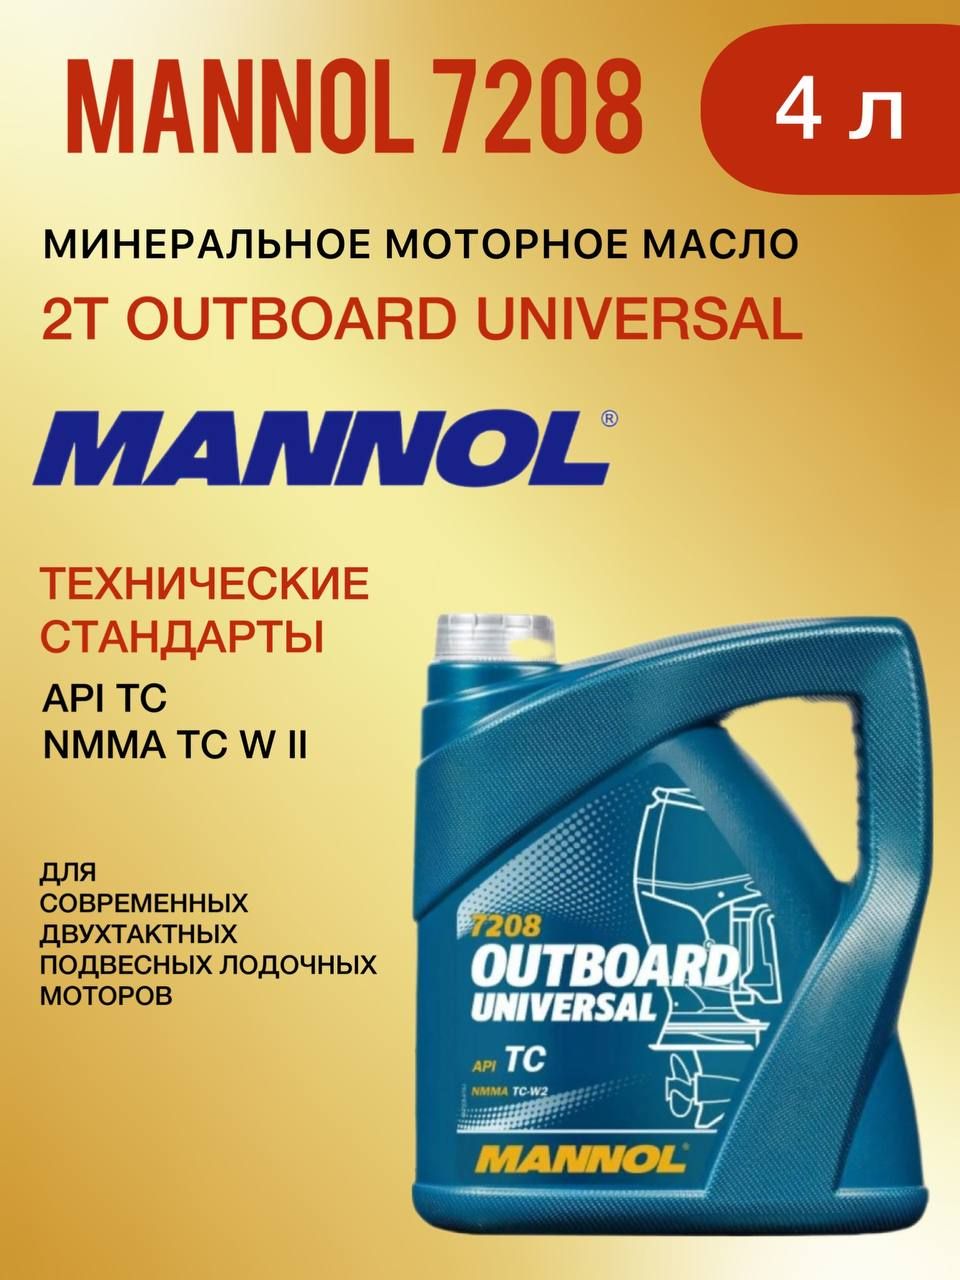 Mn7208-20_7208 Mannol outboard Universal 20 л. минеральное моторное масло 2т. Масло моторное outboard Universal (4л). Манол 2т оутборд универсал. Mineral Universal Oil 20w-50. Лодочное масло манол